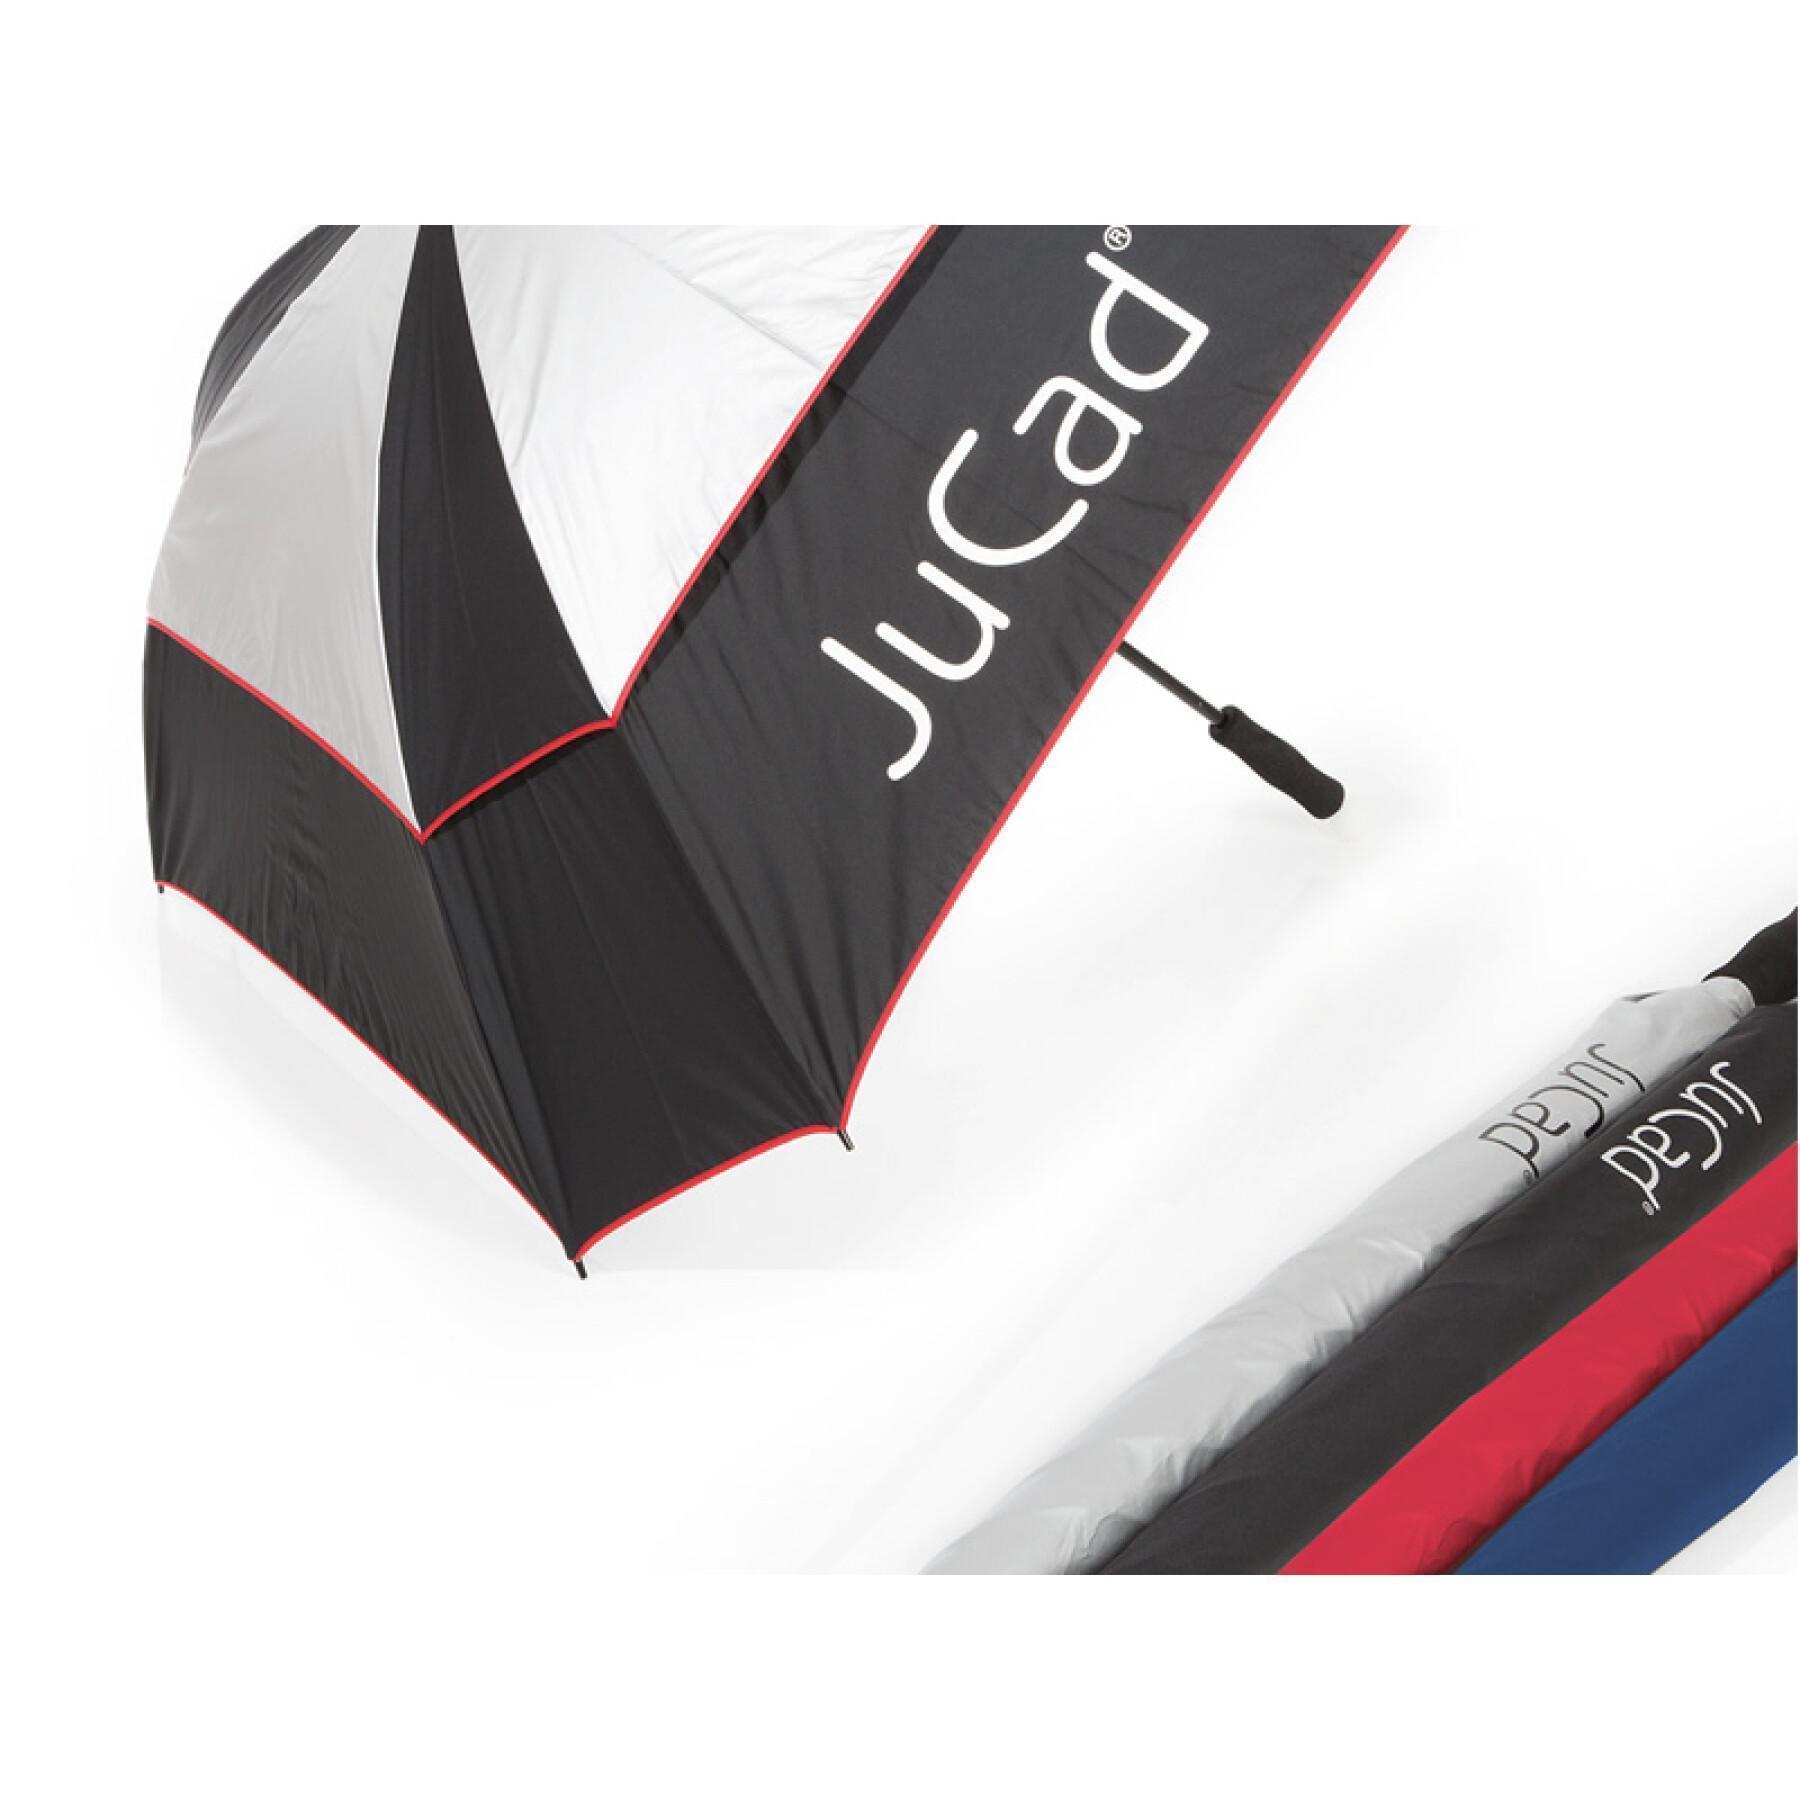 Paraguas JuCad Windproof